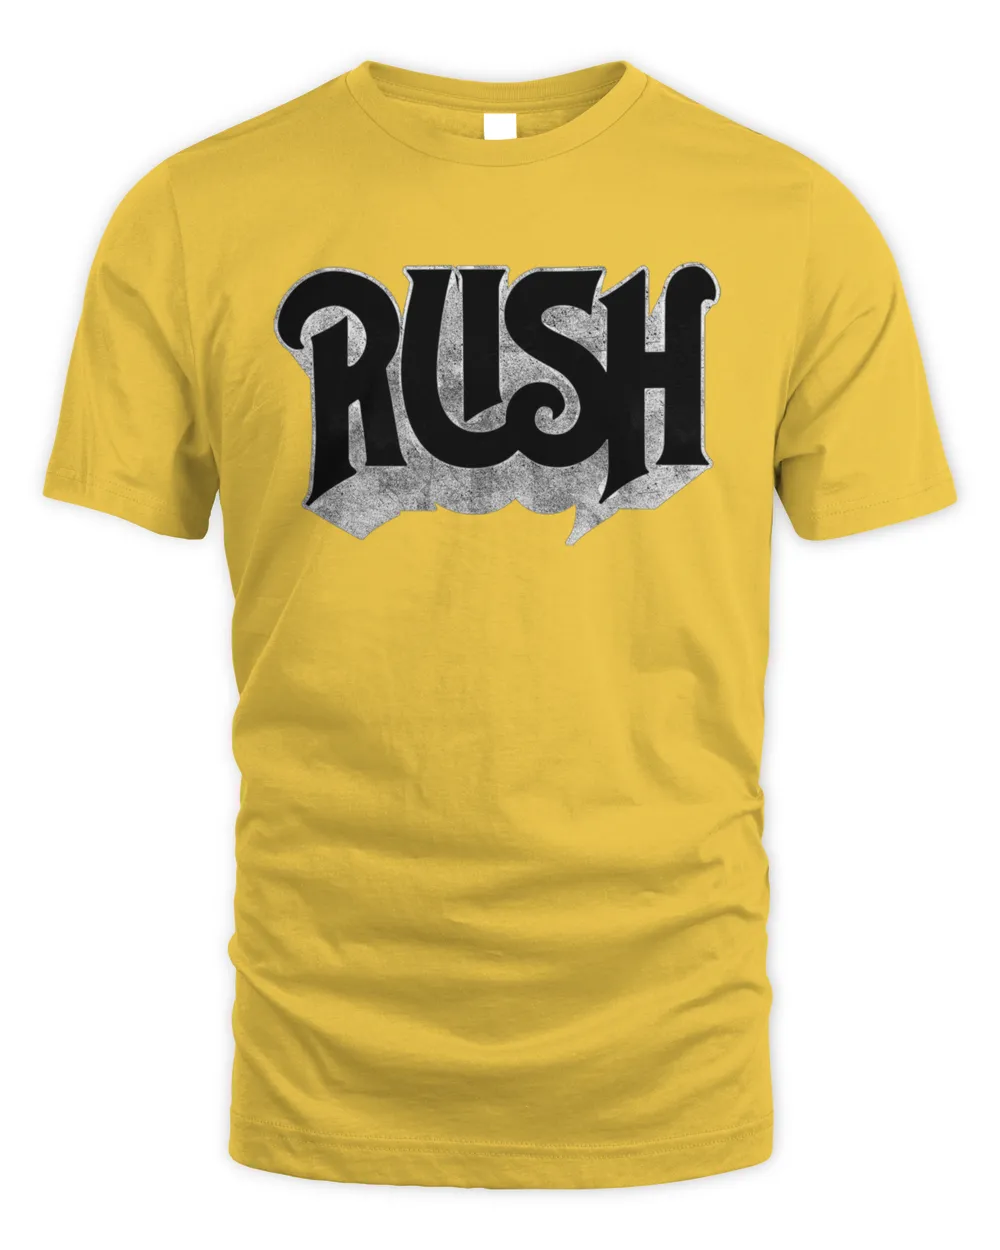 Rush - Logo - Black T-shirt